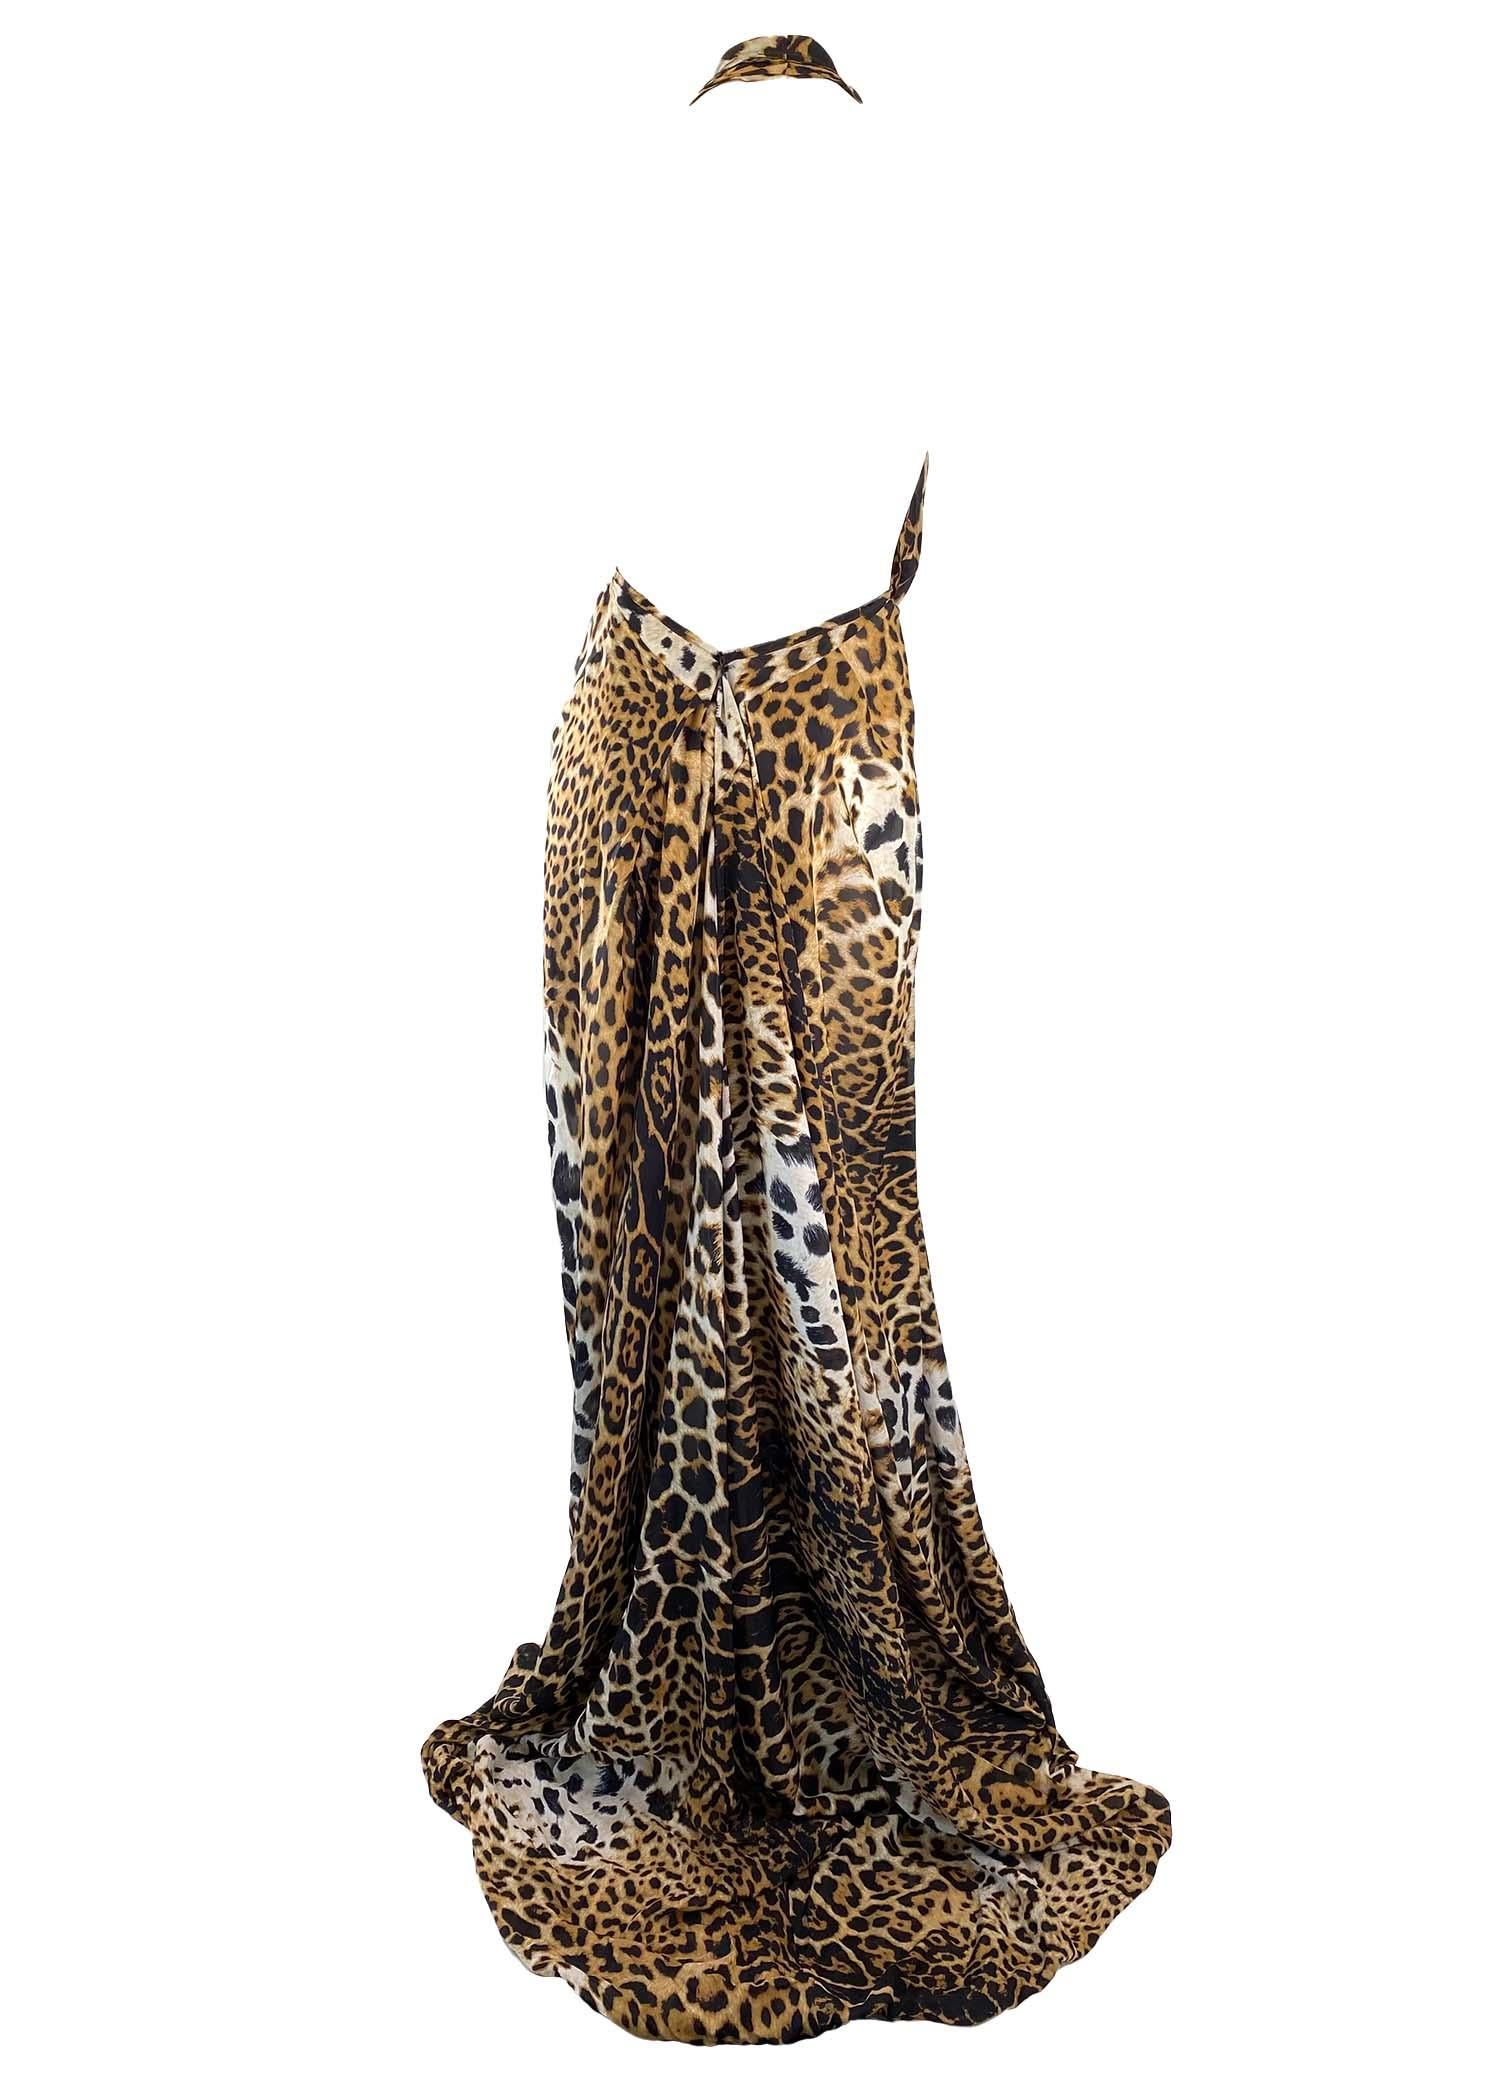 S/S 2002 Yves Saint Laurent by Tom Ford Silk Cheetah Print Gown Safari  For Sale 1